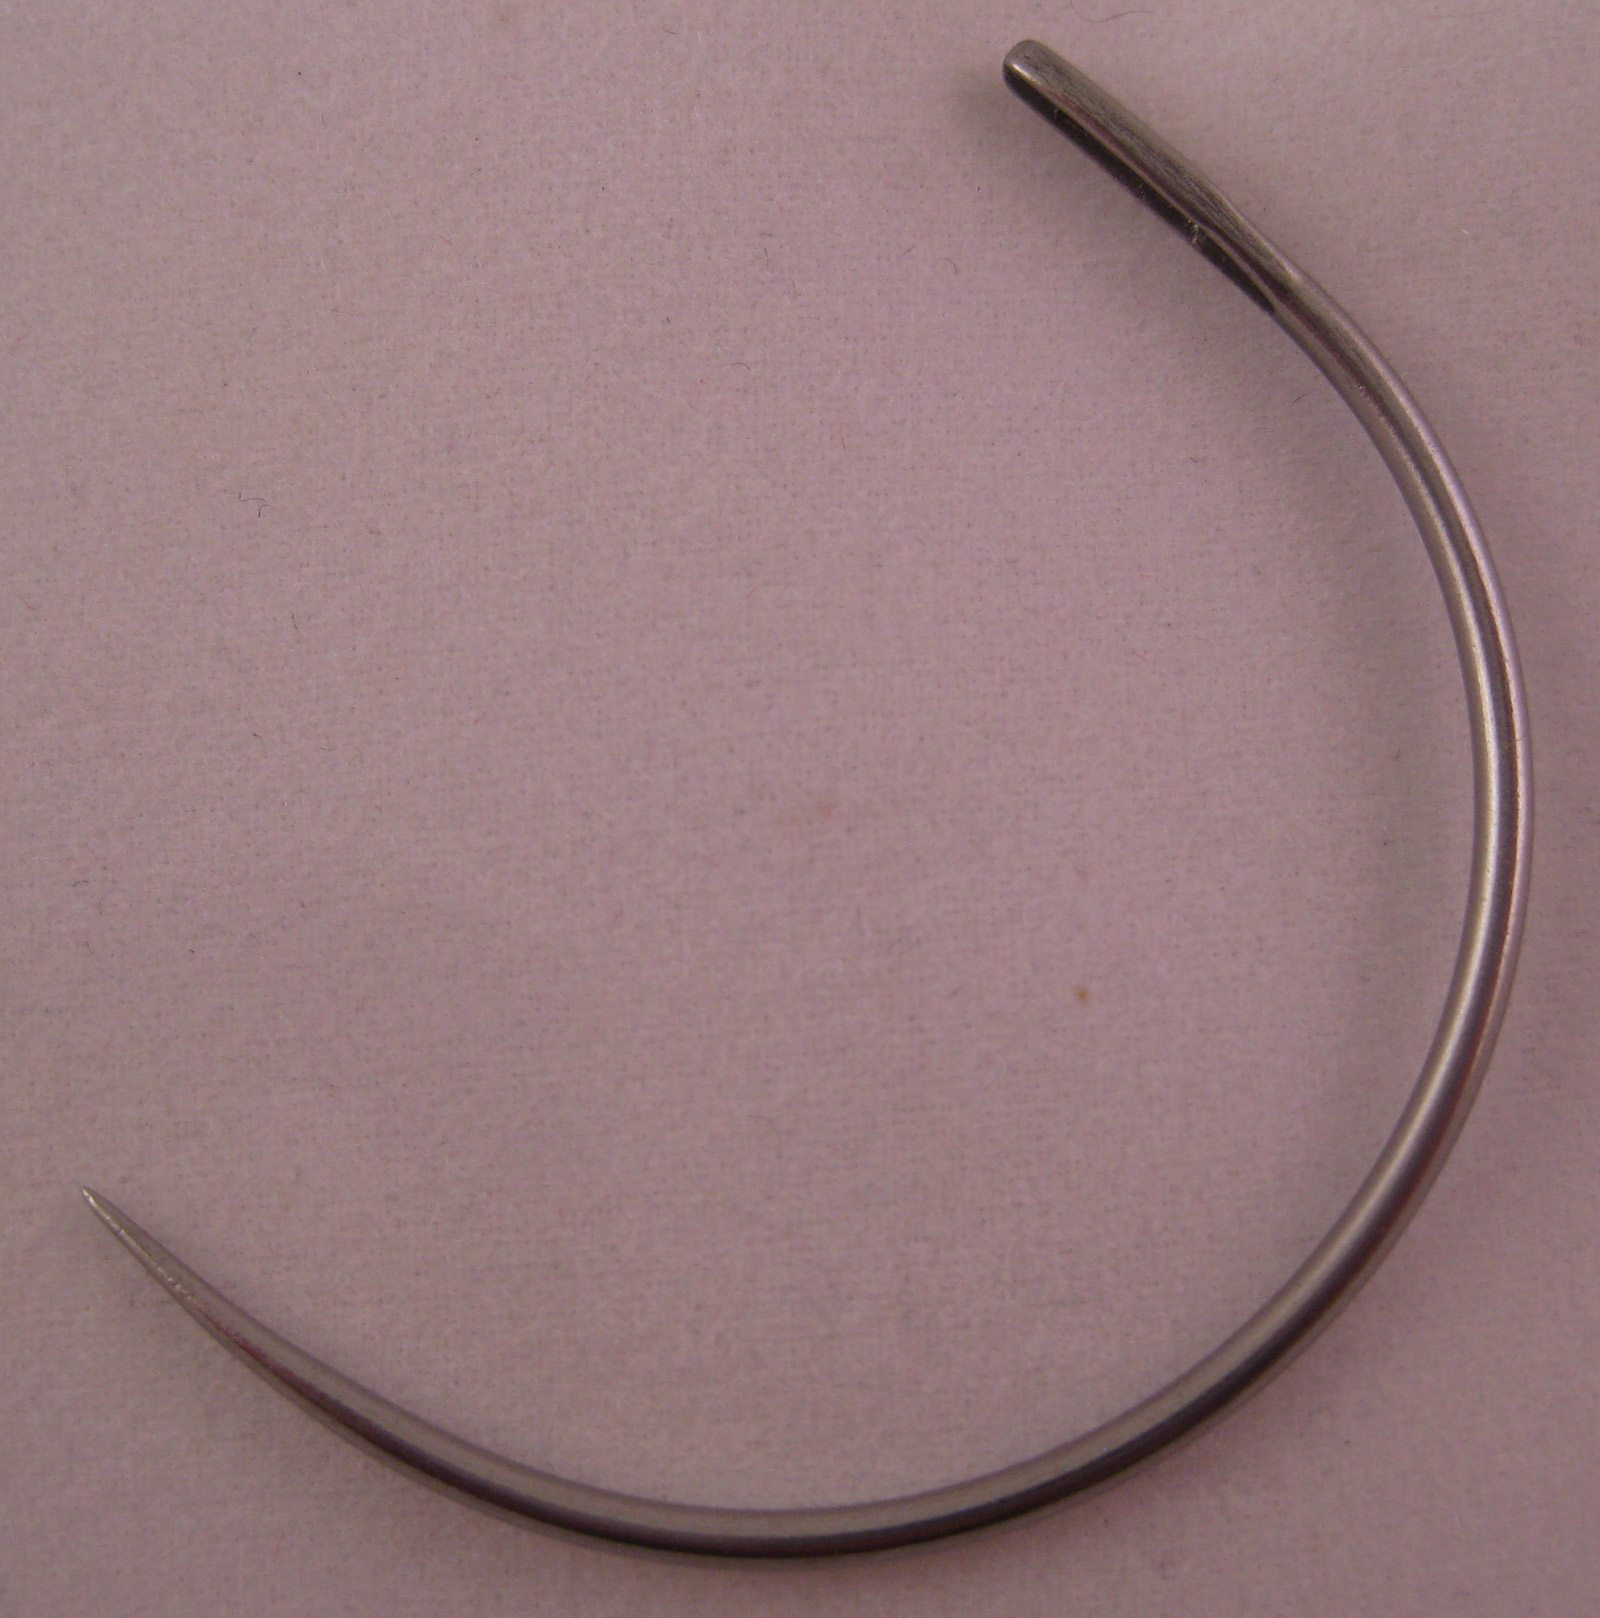 Avanti Curved Needles, C Type Weaving Needle, Hand Sewing Needles